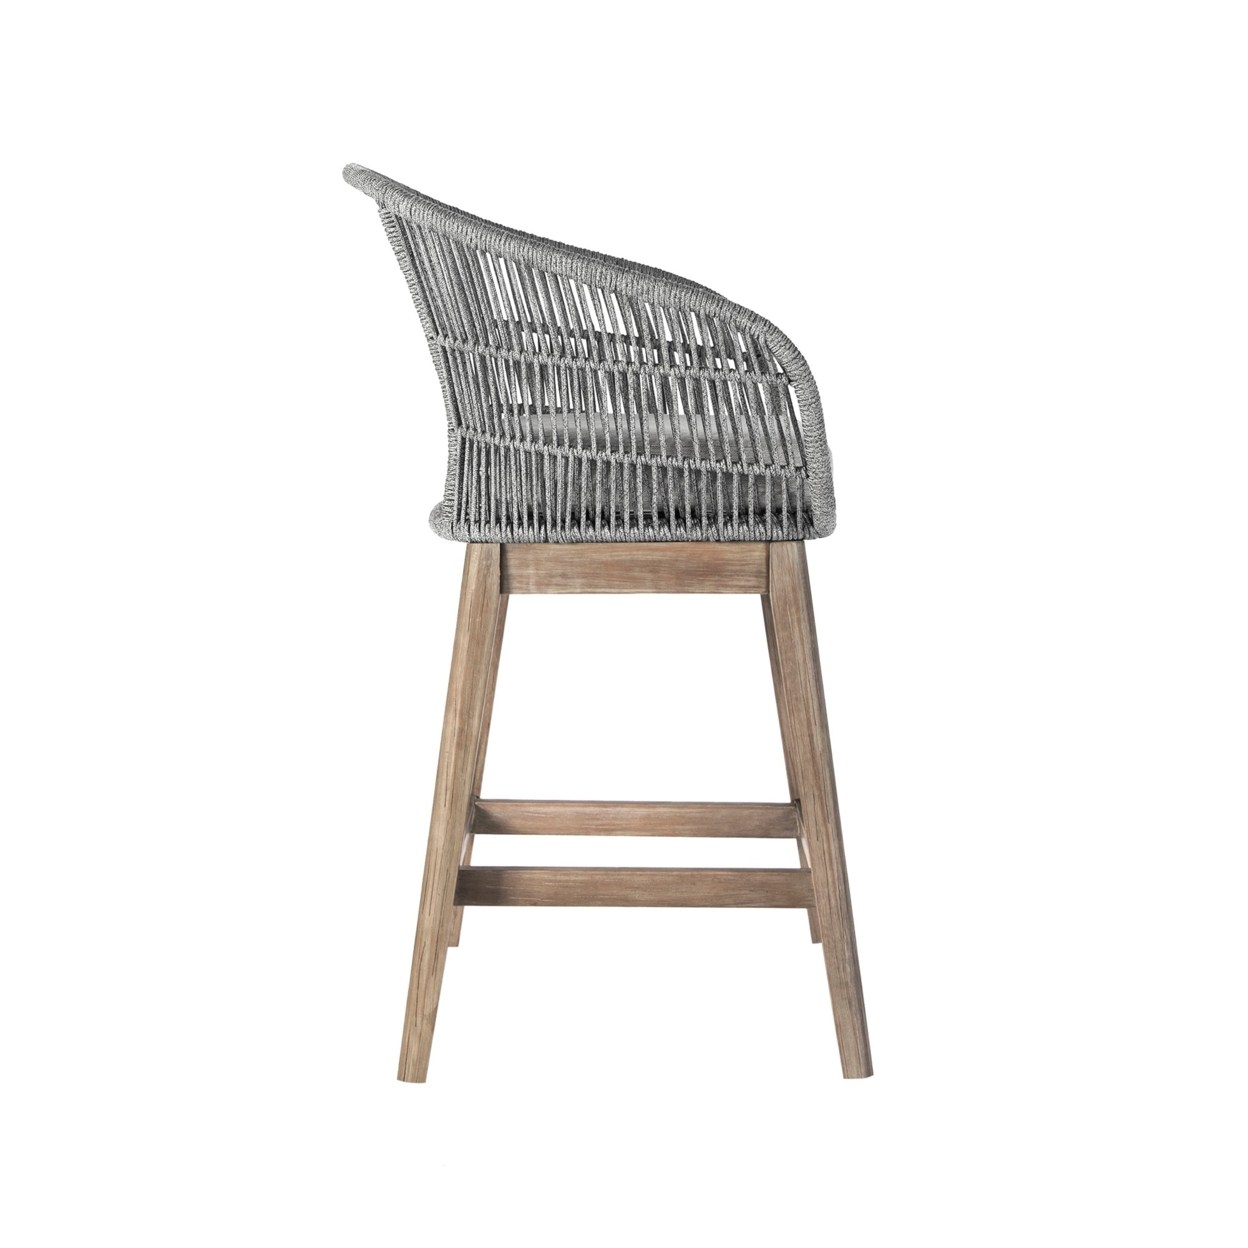 Mila 26 Inch Outdoor Teak Wood Counter Stool Chair, Rope Woven, Gray, Brown- Saltoro Sherpi